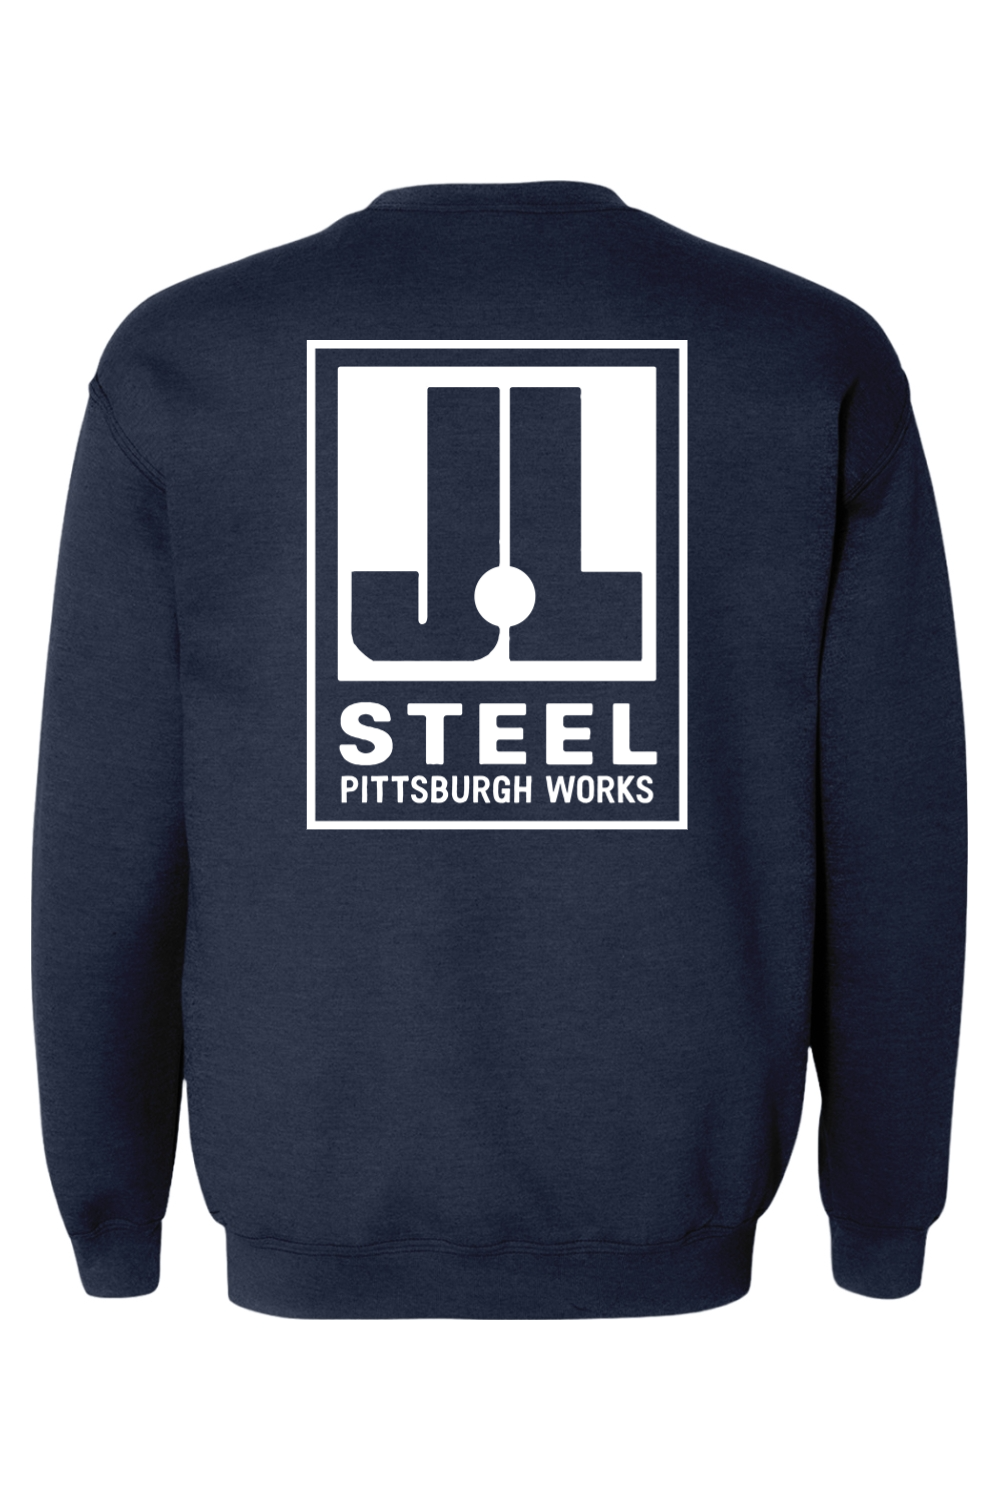 J&L Steel Pittsburgh Works Front/Back - Crewneck Sweatshirt - Yinzylvania